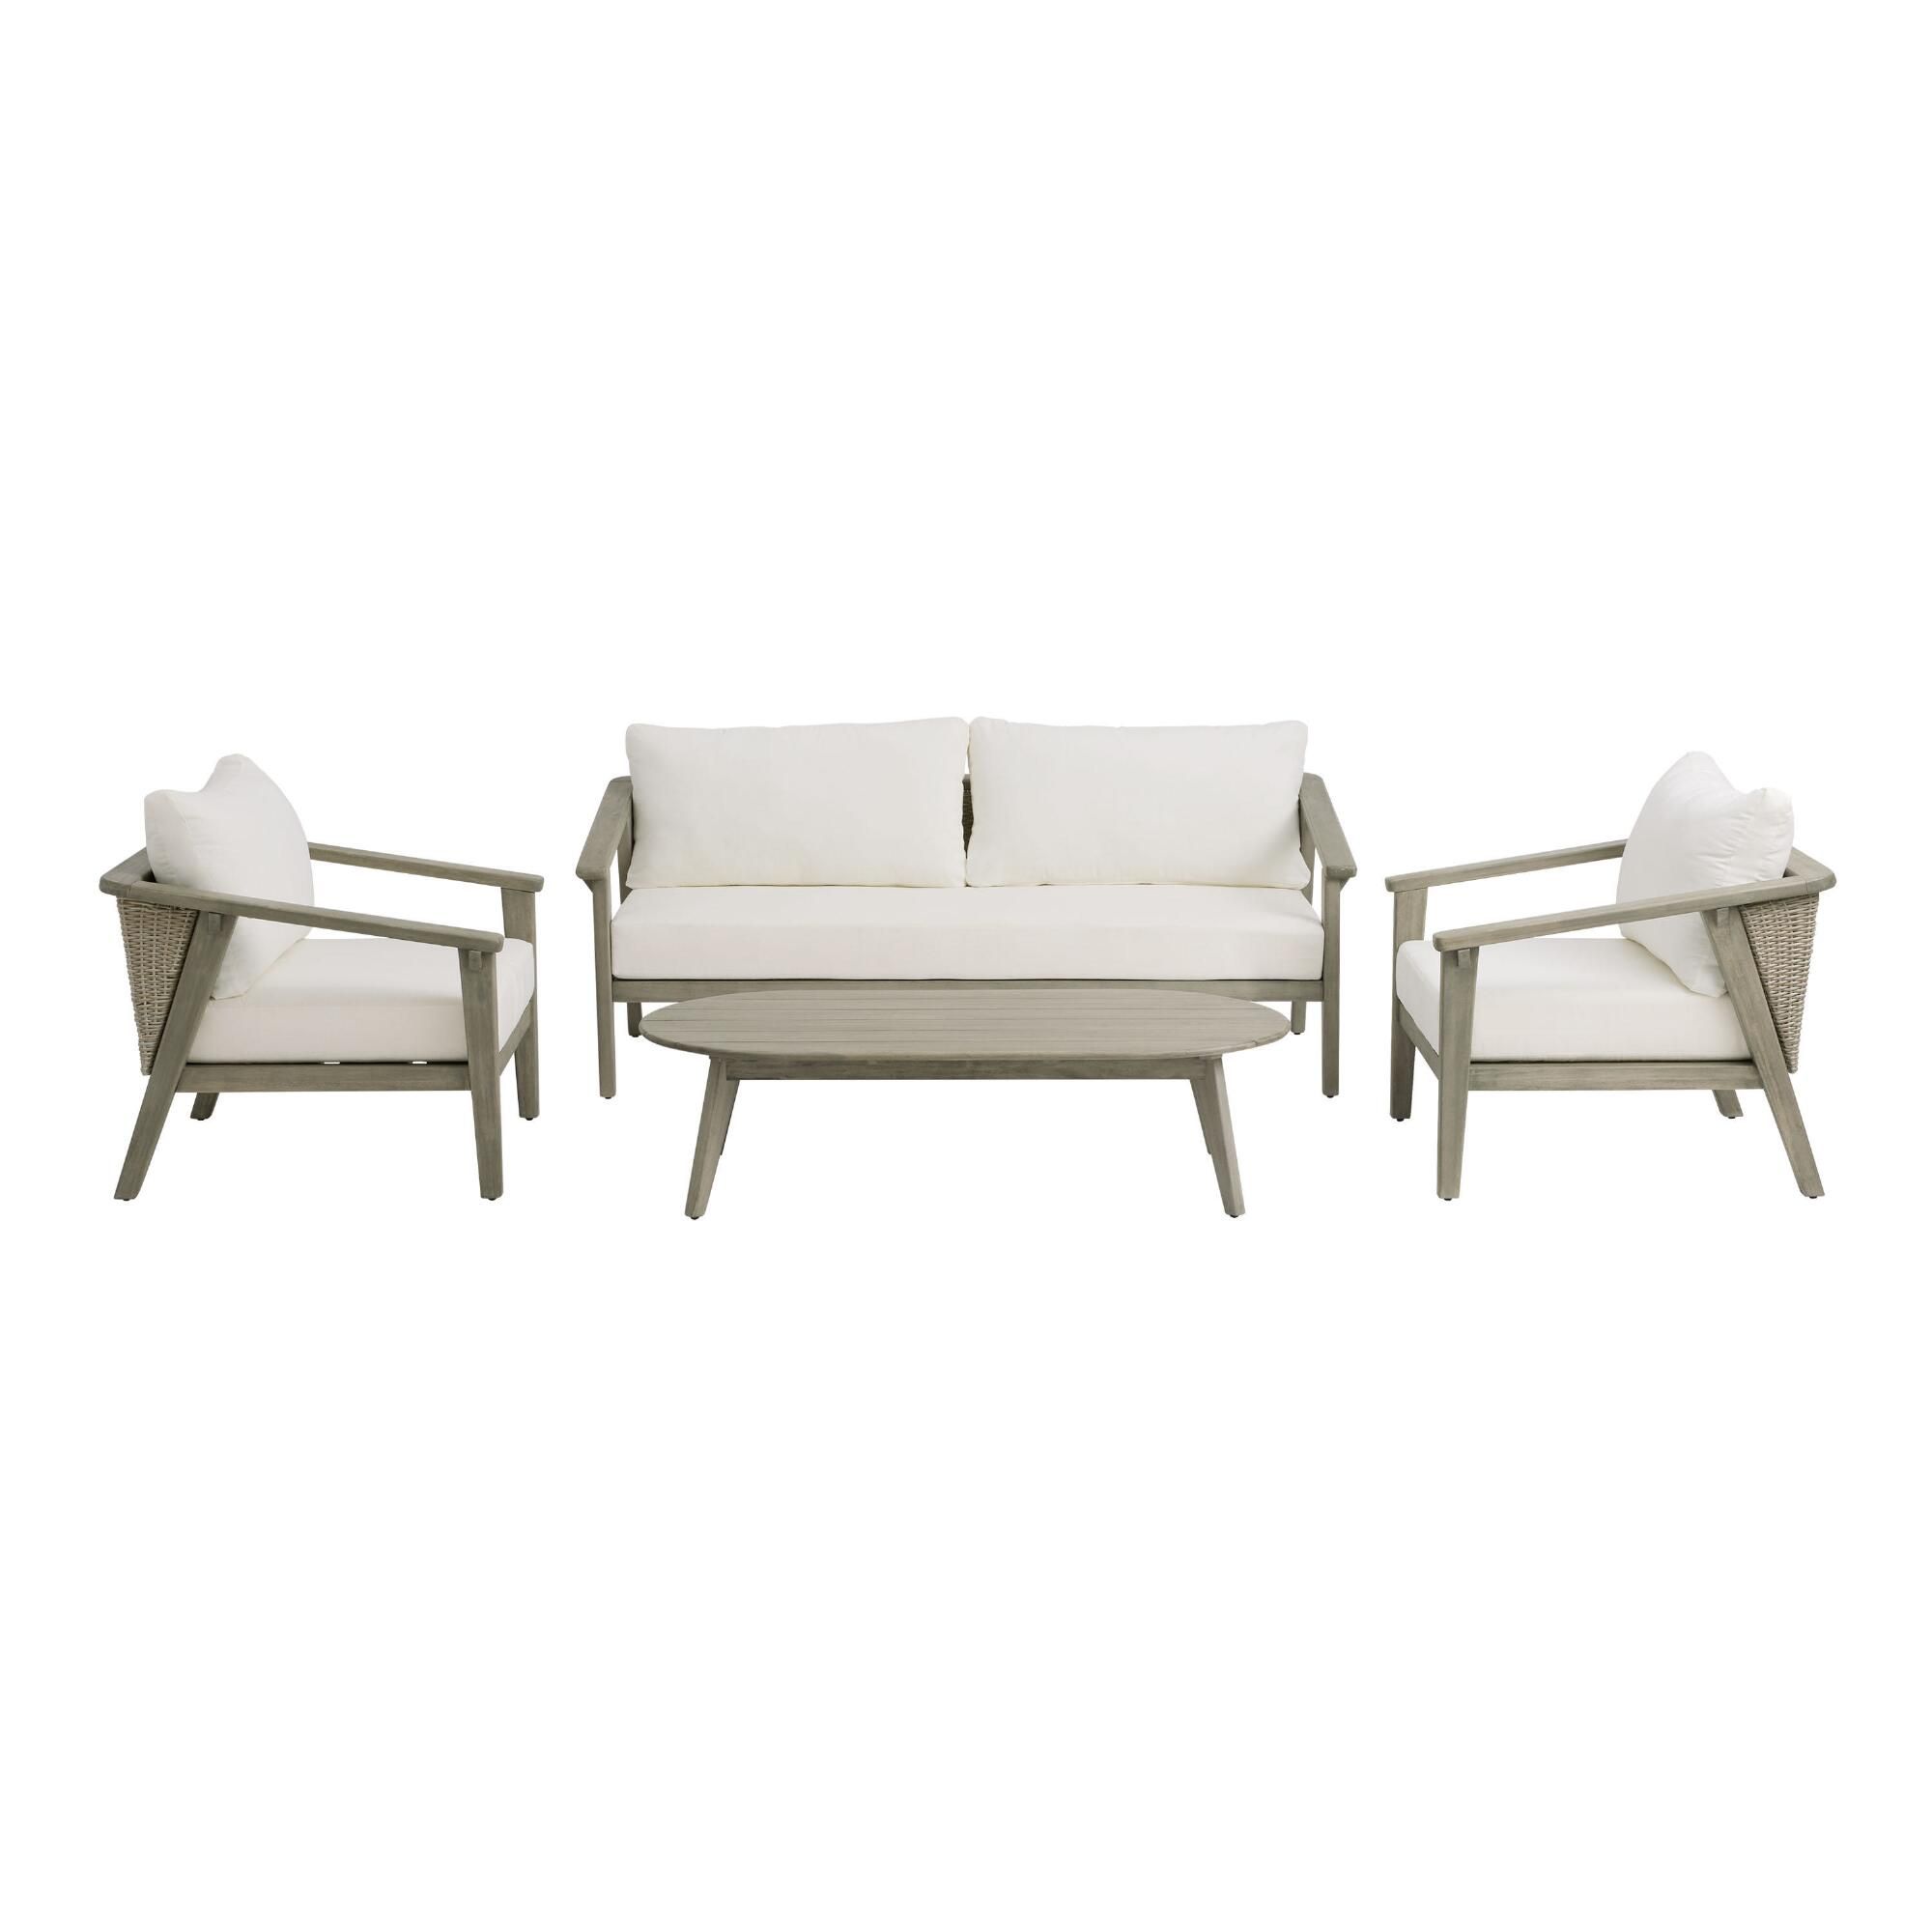 San Marino Graywashed Acacia Outdoor Furniture Collection | World Market